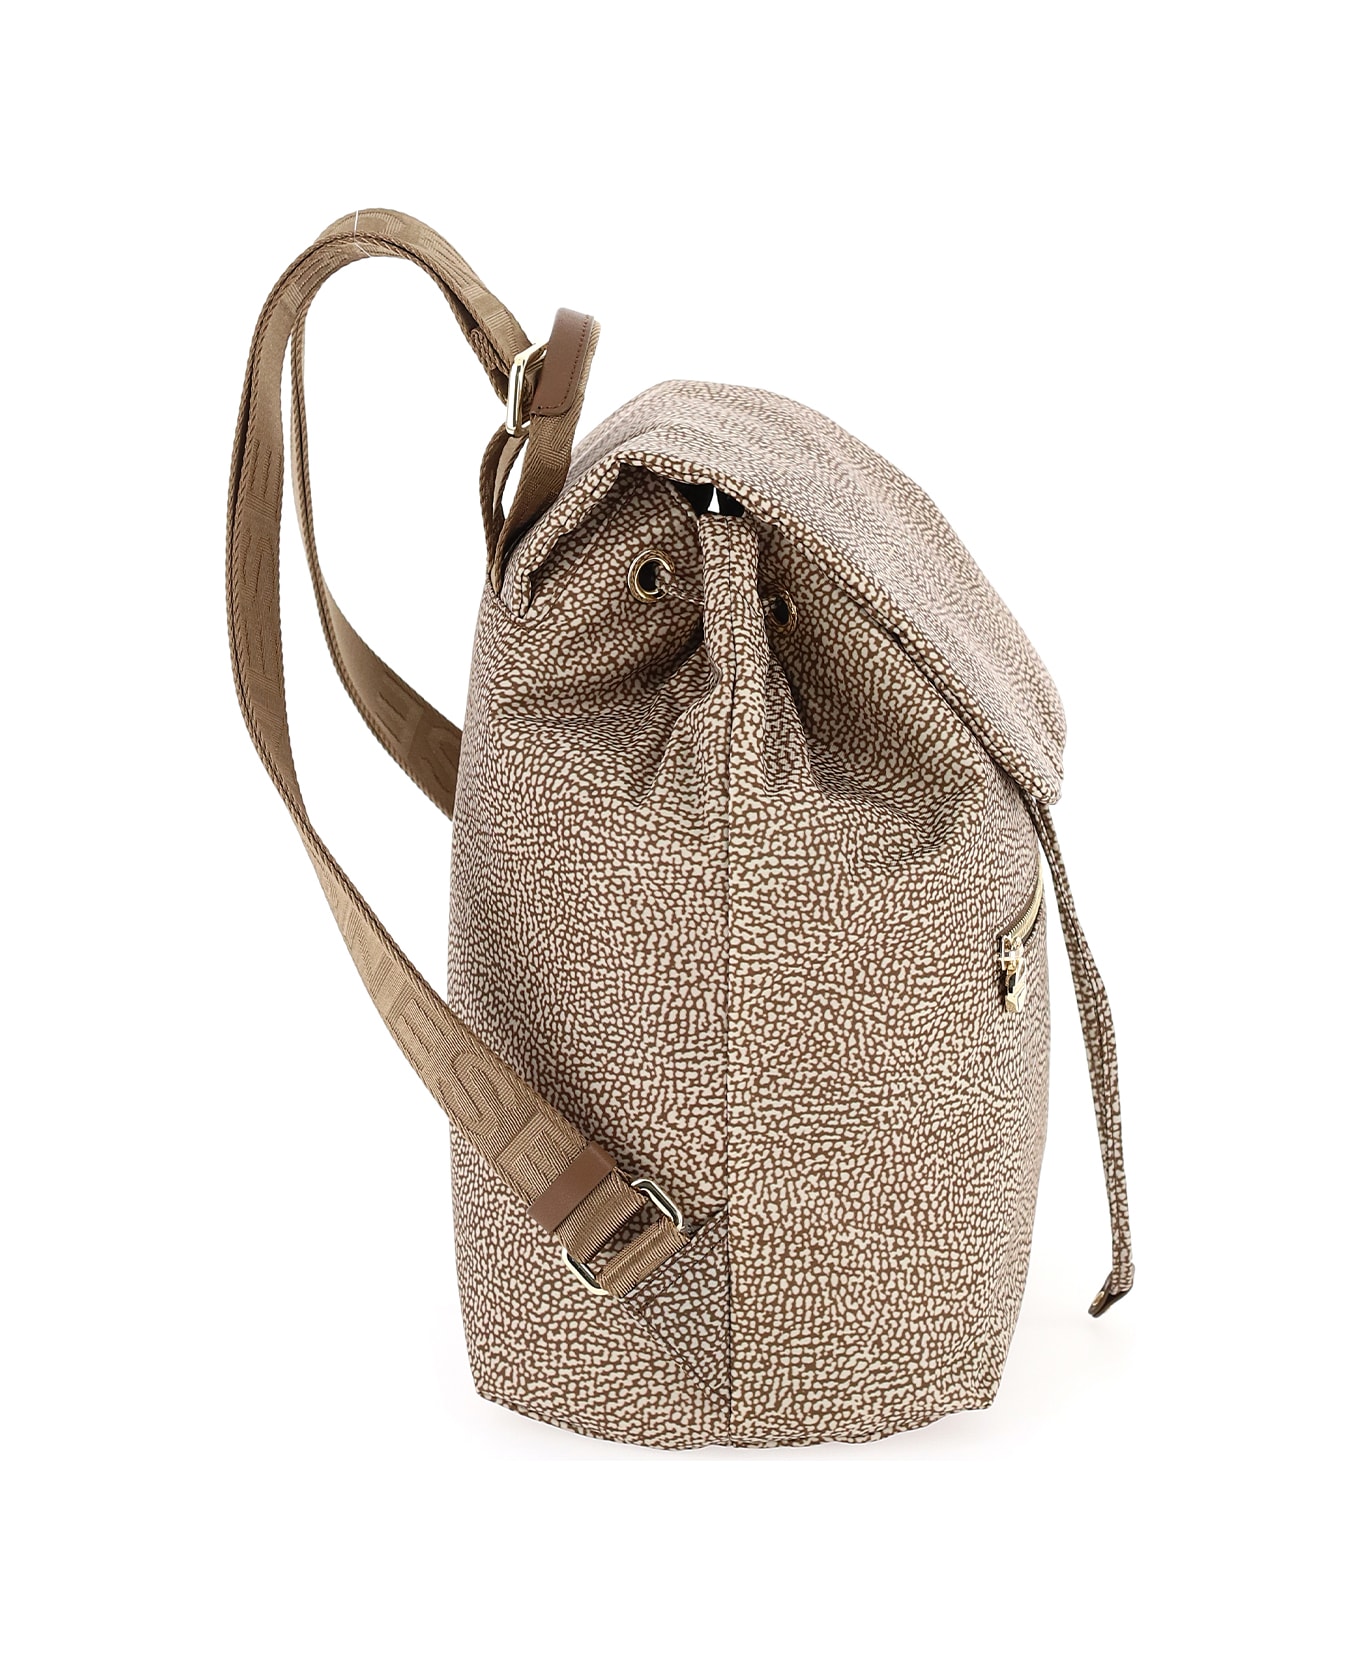 Borbonese Eco Line Medium Backpack In Op Fabric - BEIGE/MARRONE